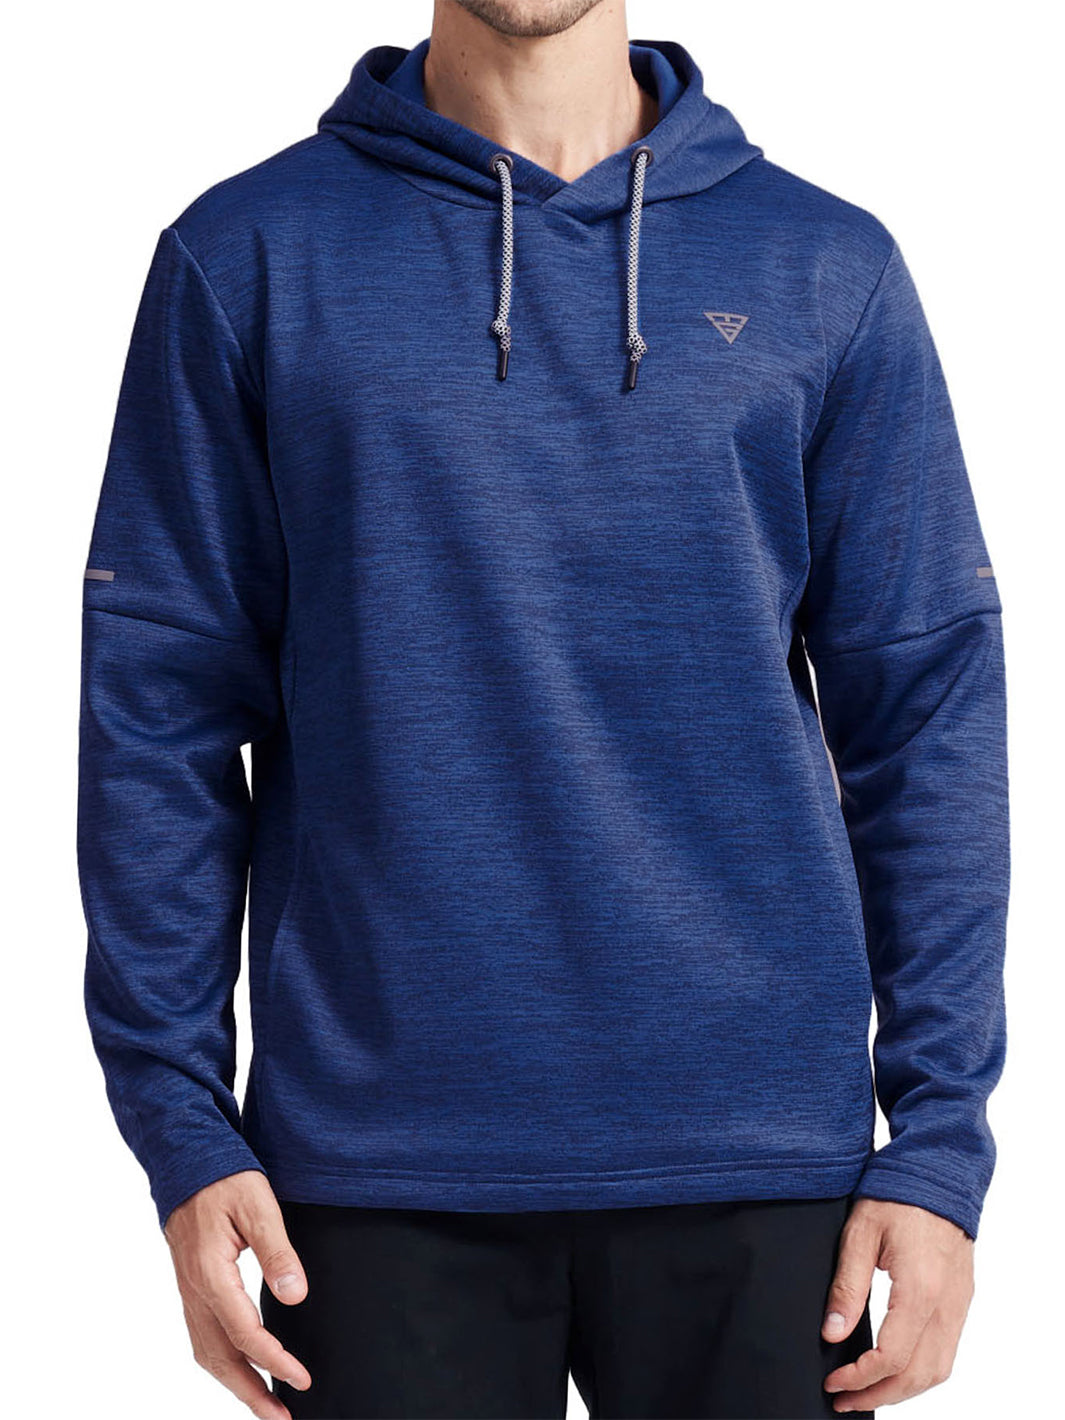 Maelreg Dry Fit Golf Fleece Hooded Pullover Sweatshirts For Men